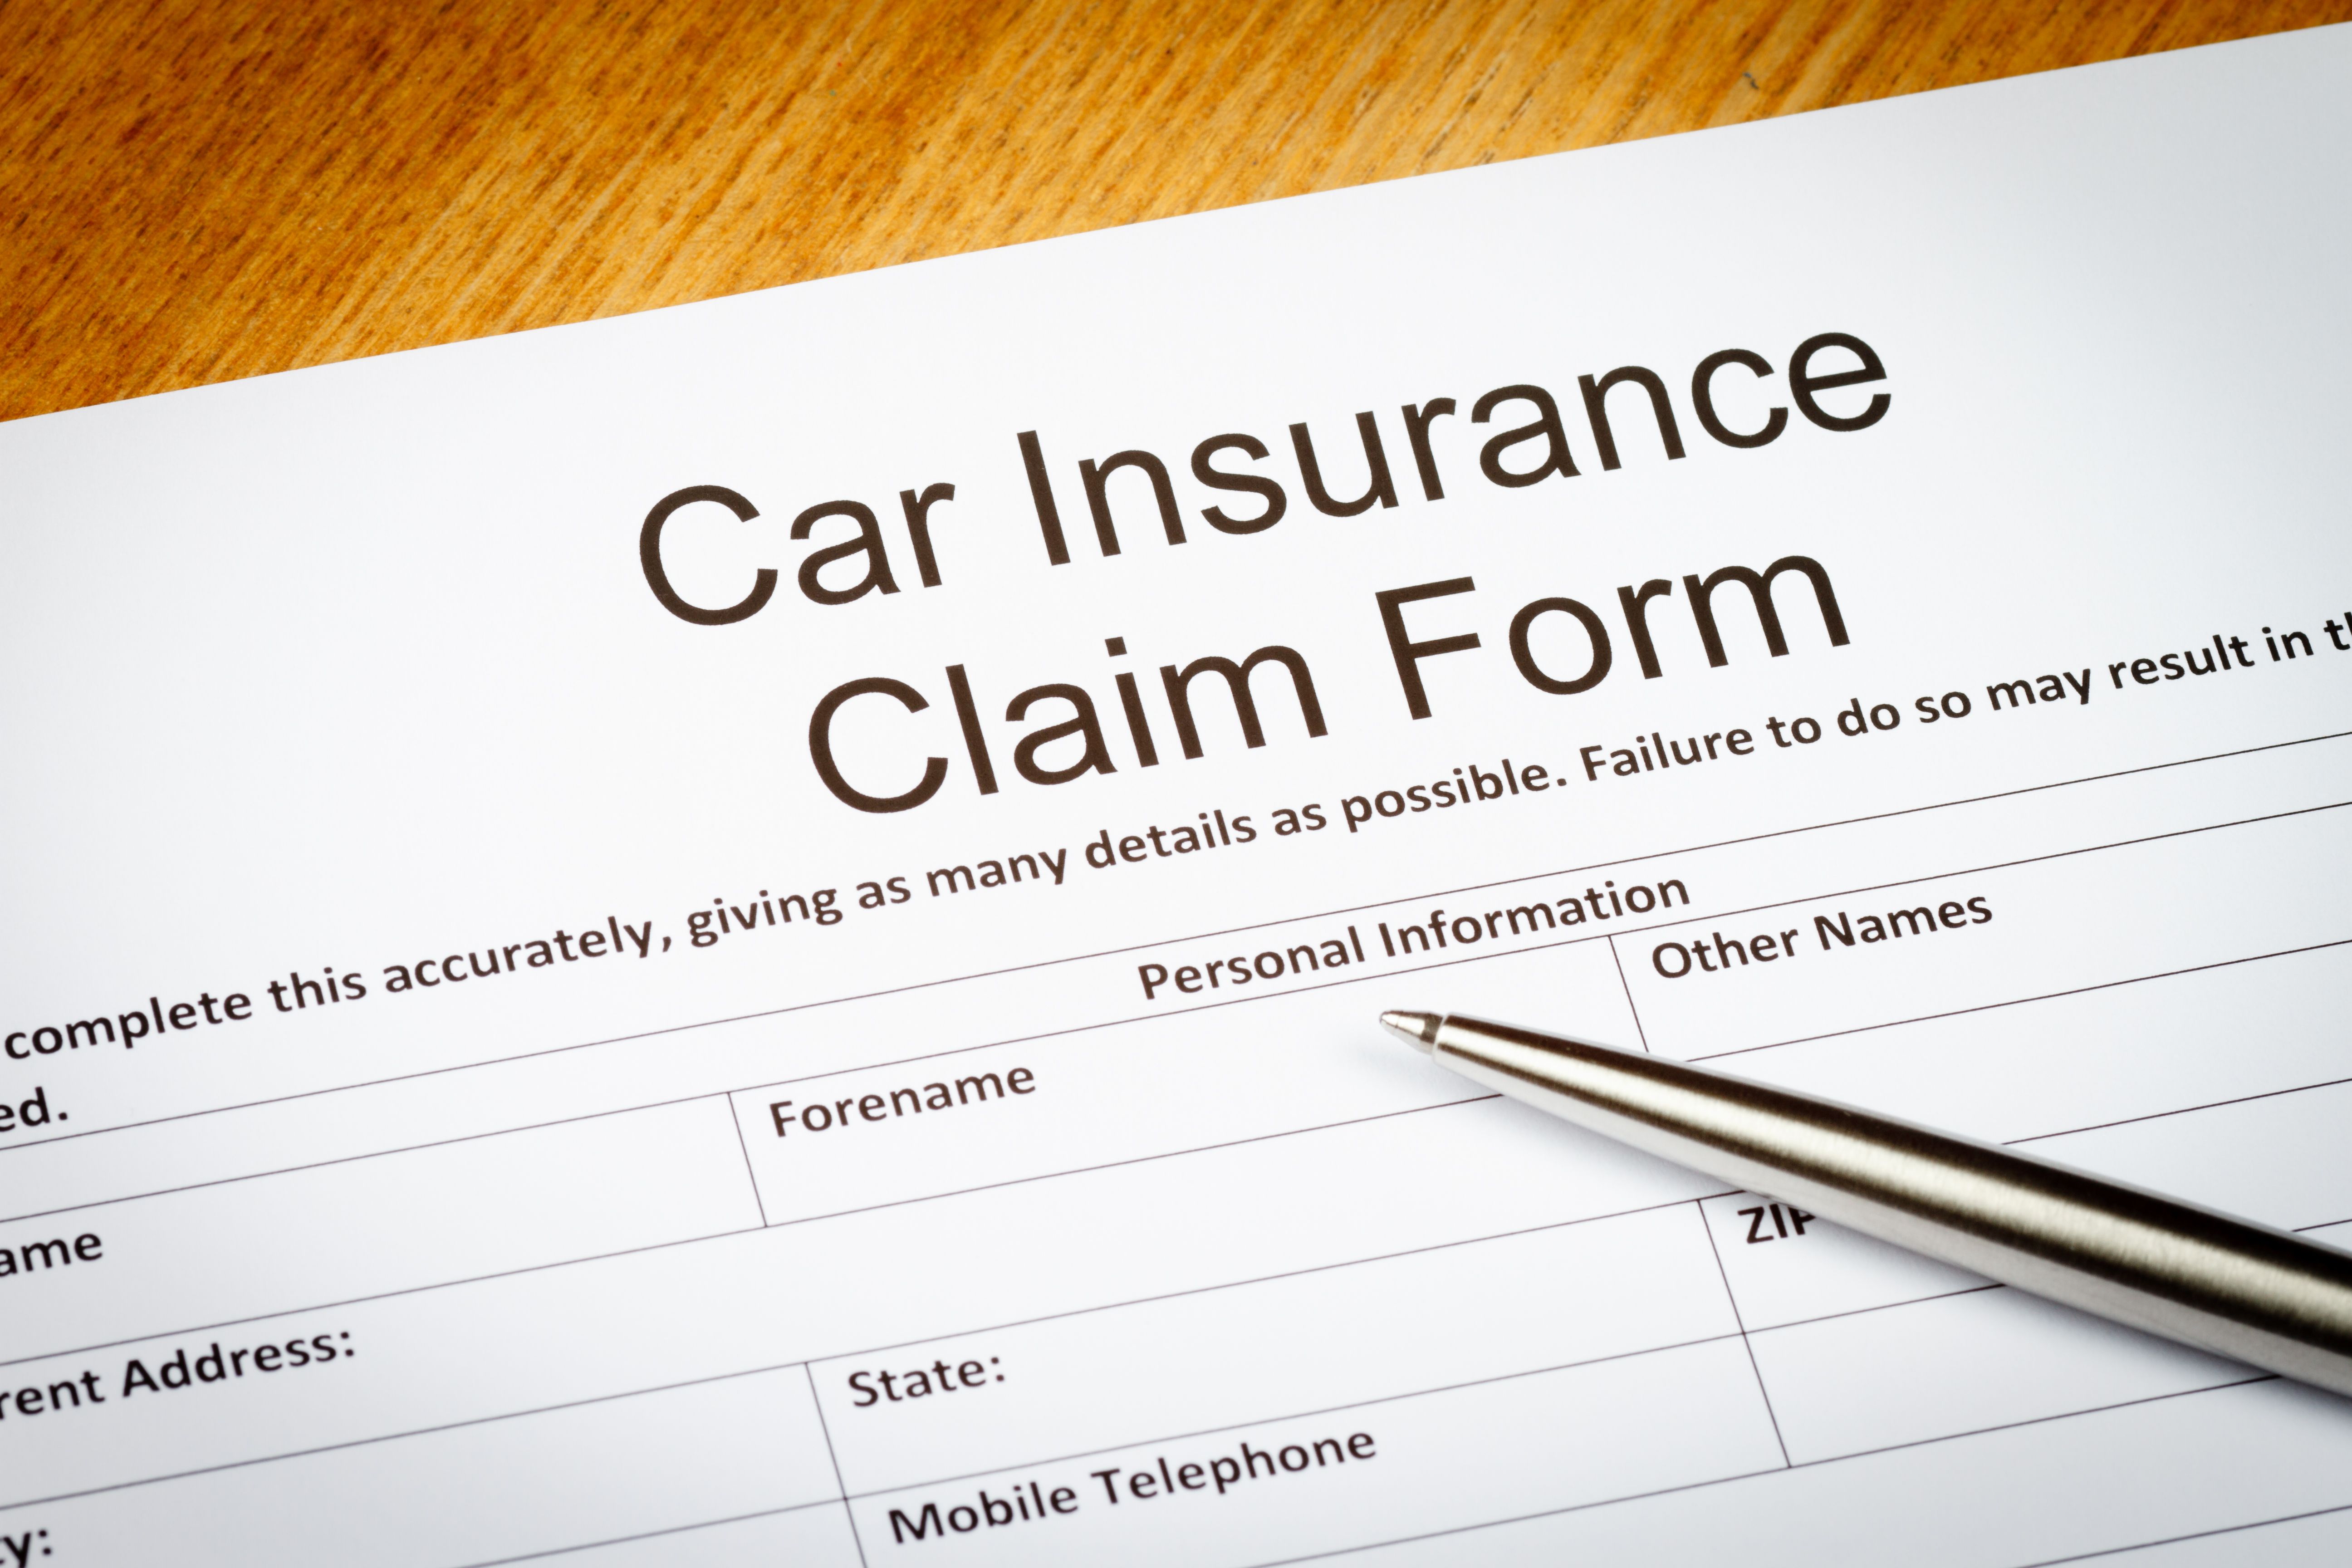 auto insurance policy